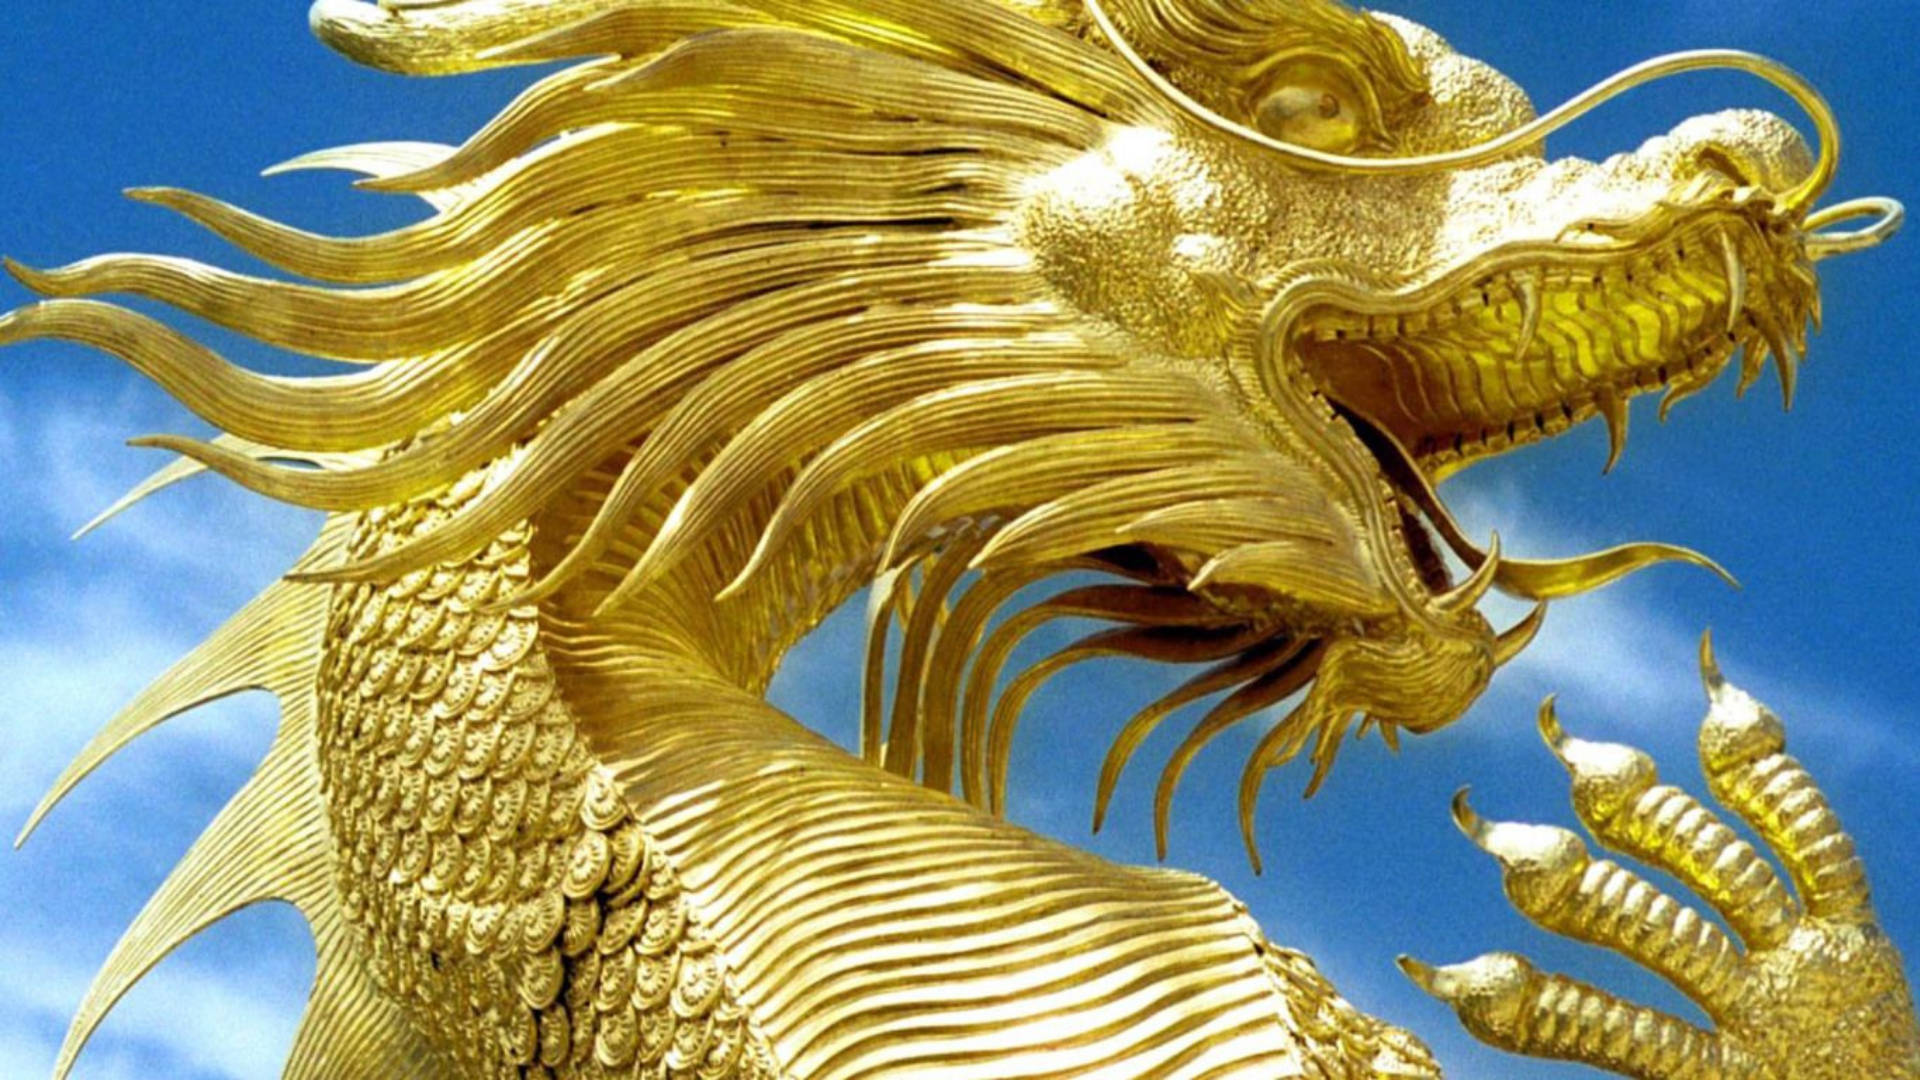 Caption: Majestic Golden Dragon Sculpture Background